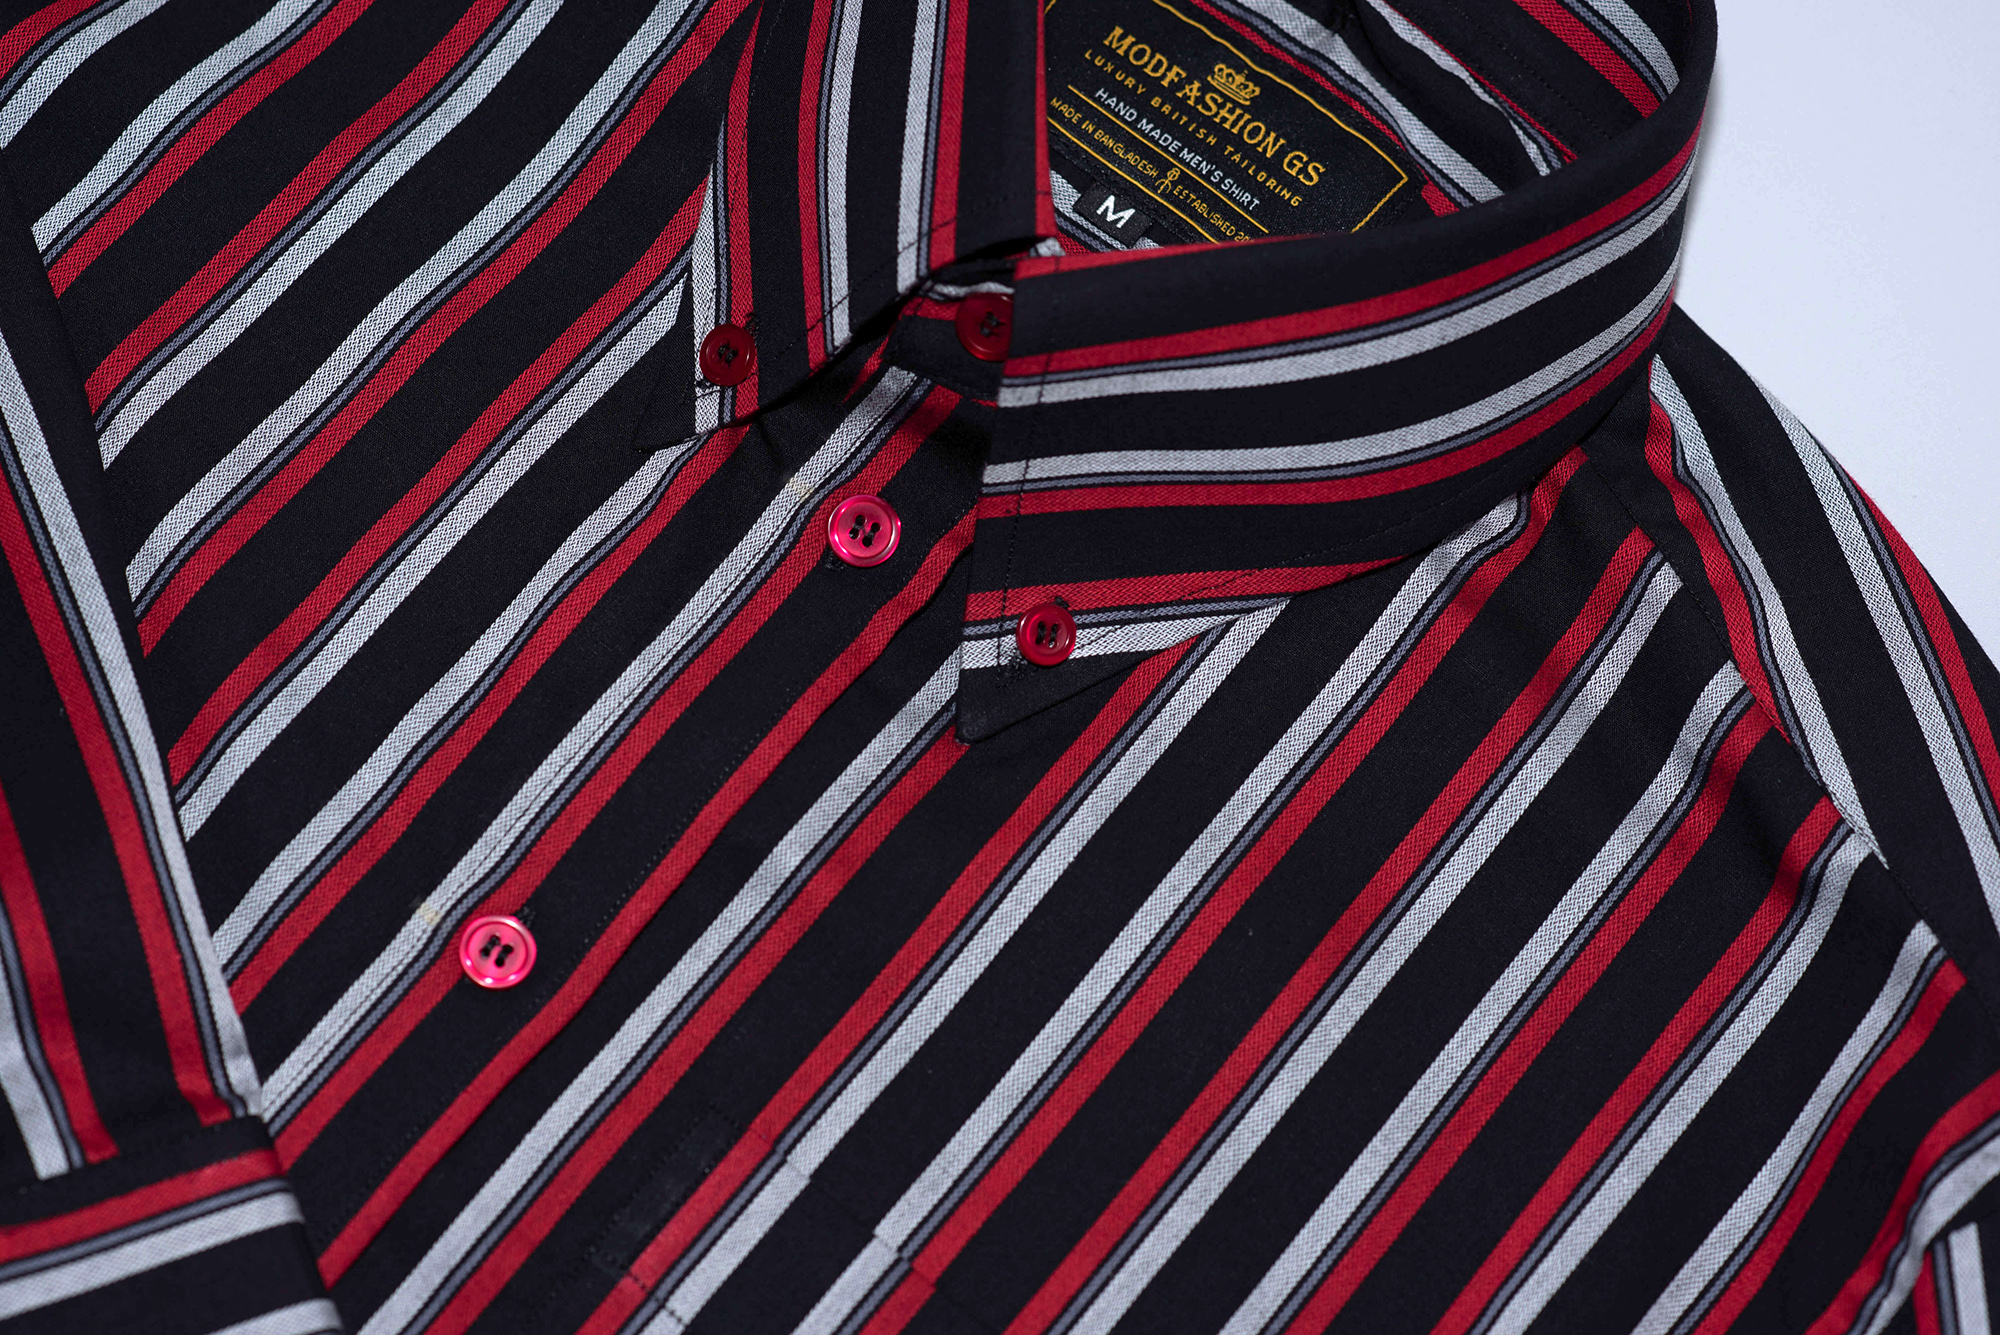 Mod shirt I 60's style high collar red & black stripe shirt